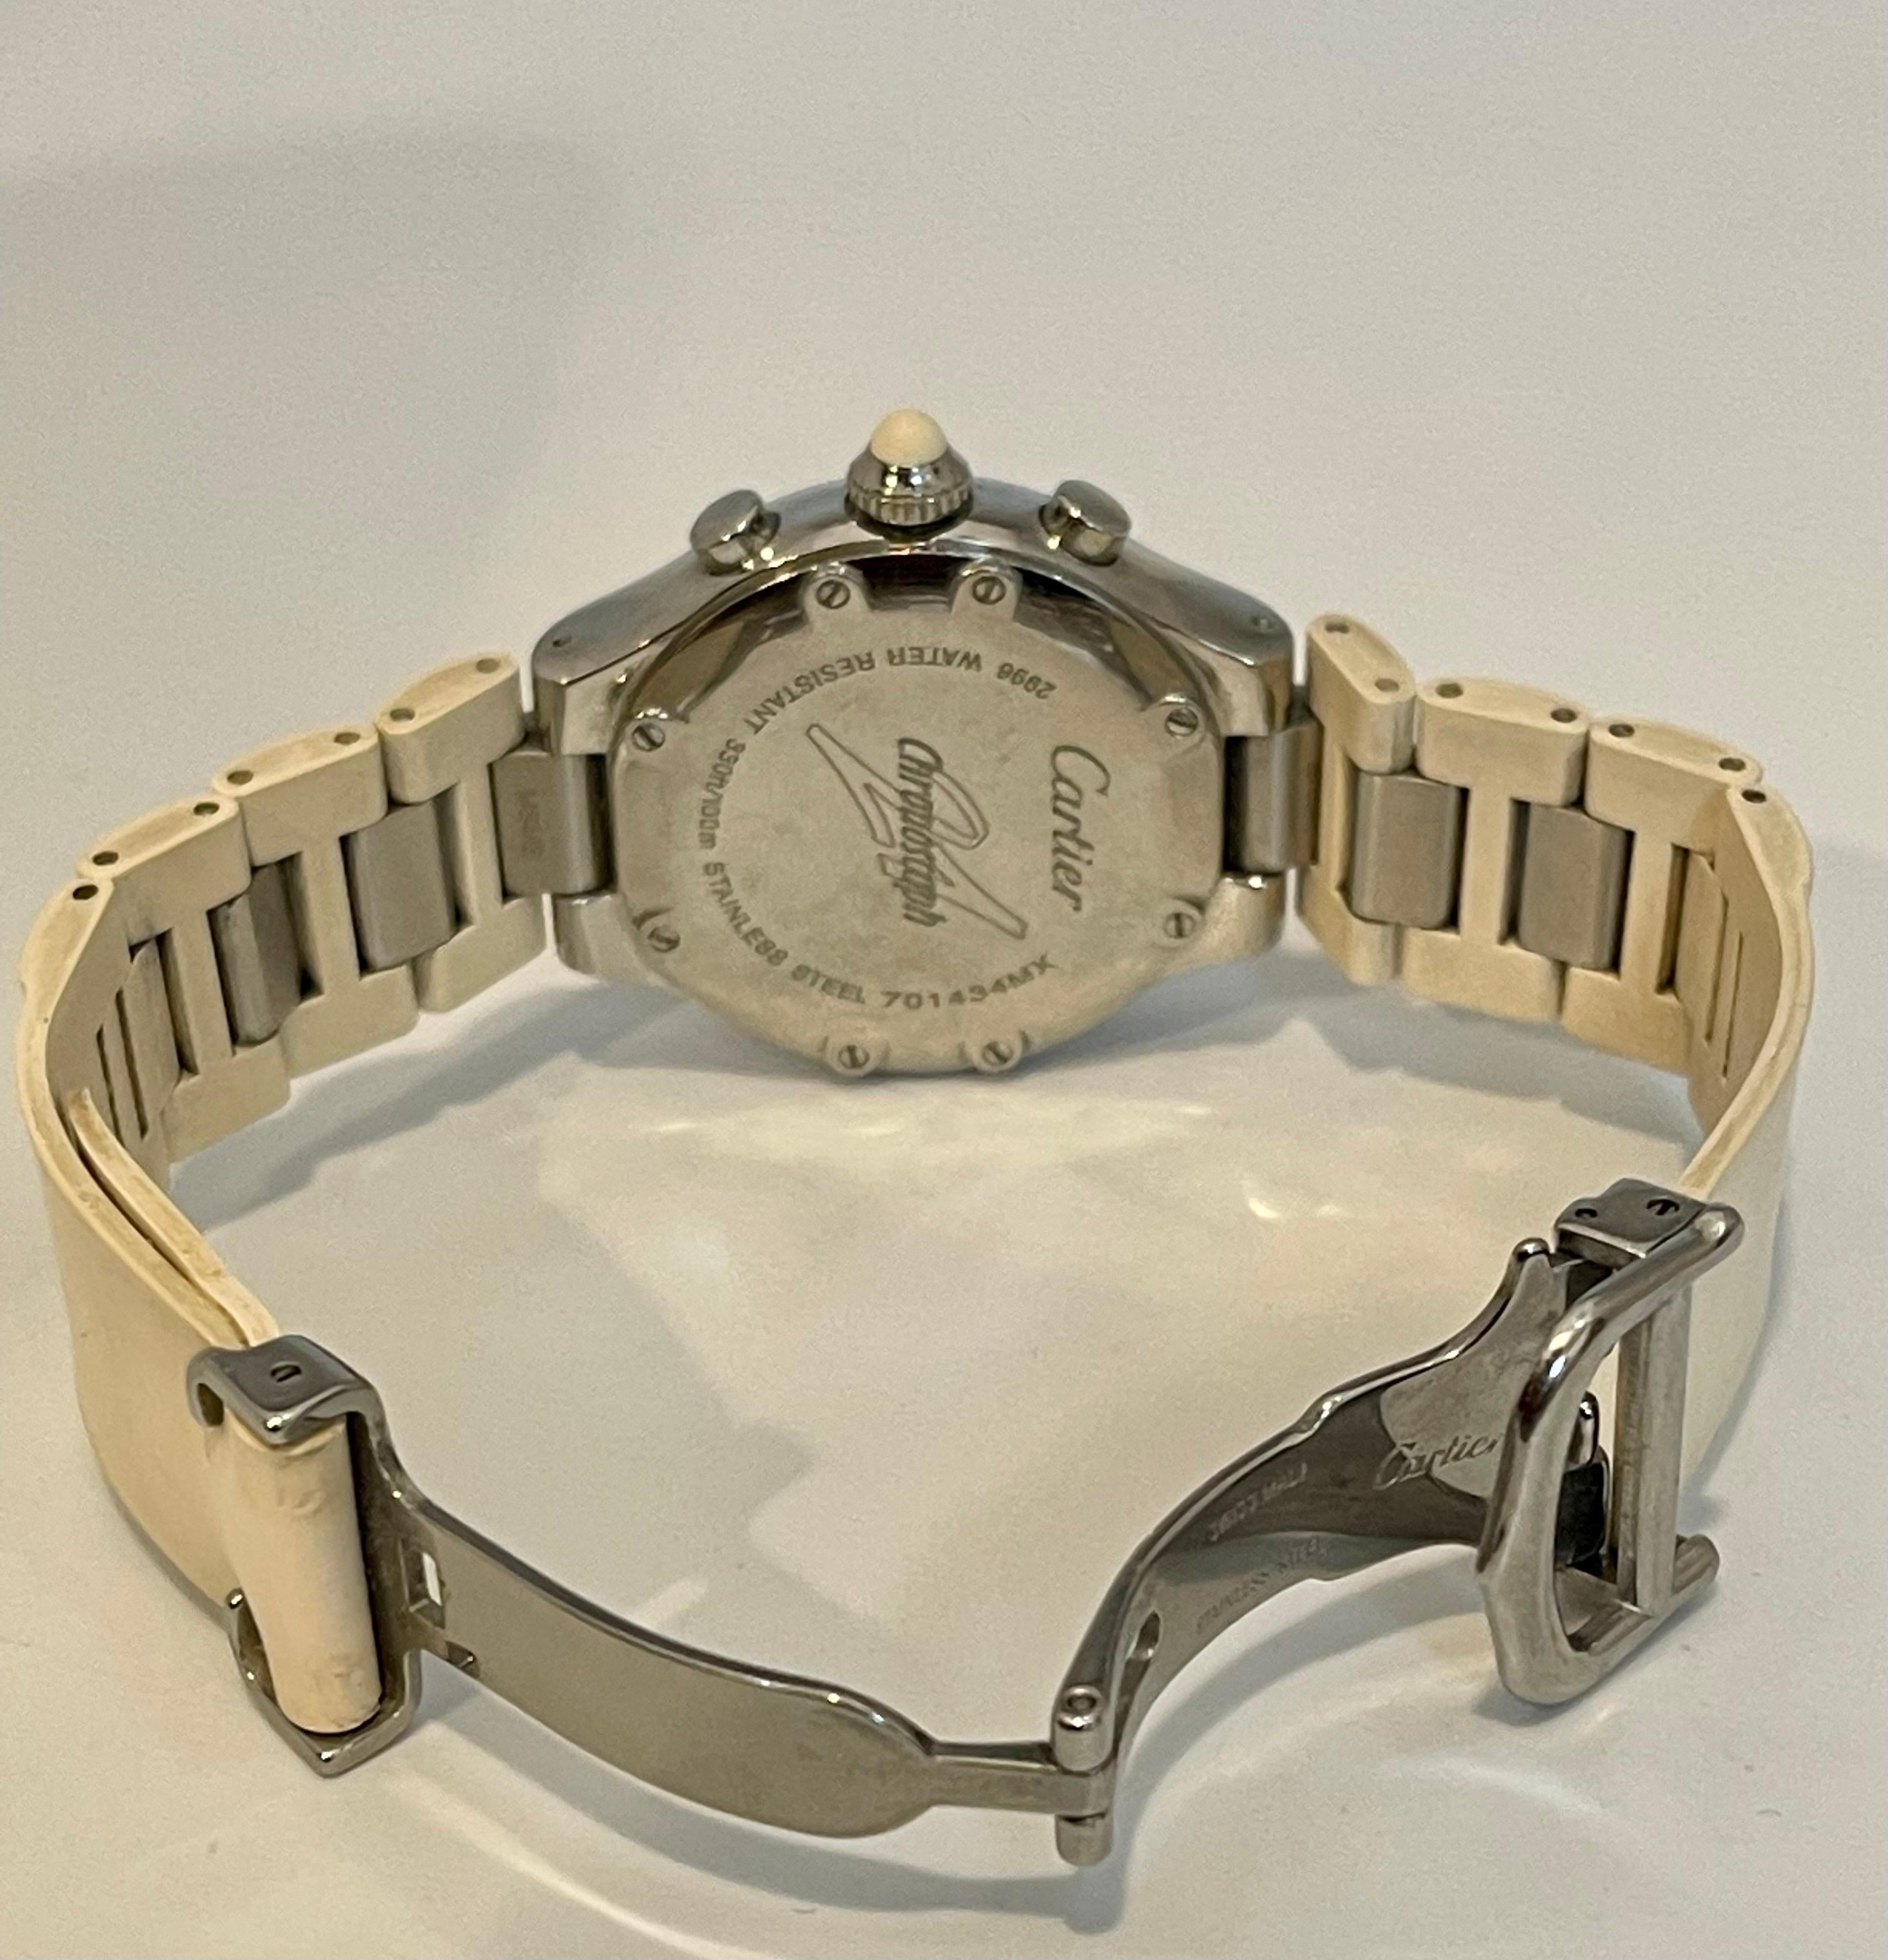 Cartier Chronoscaph Cream Women's Rubber Strap Watch, 2996 For Sale 4